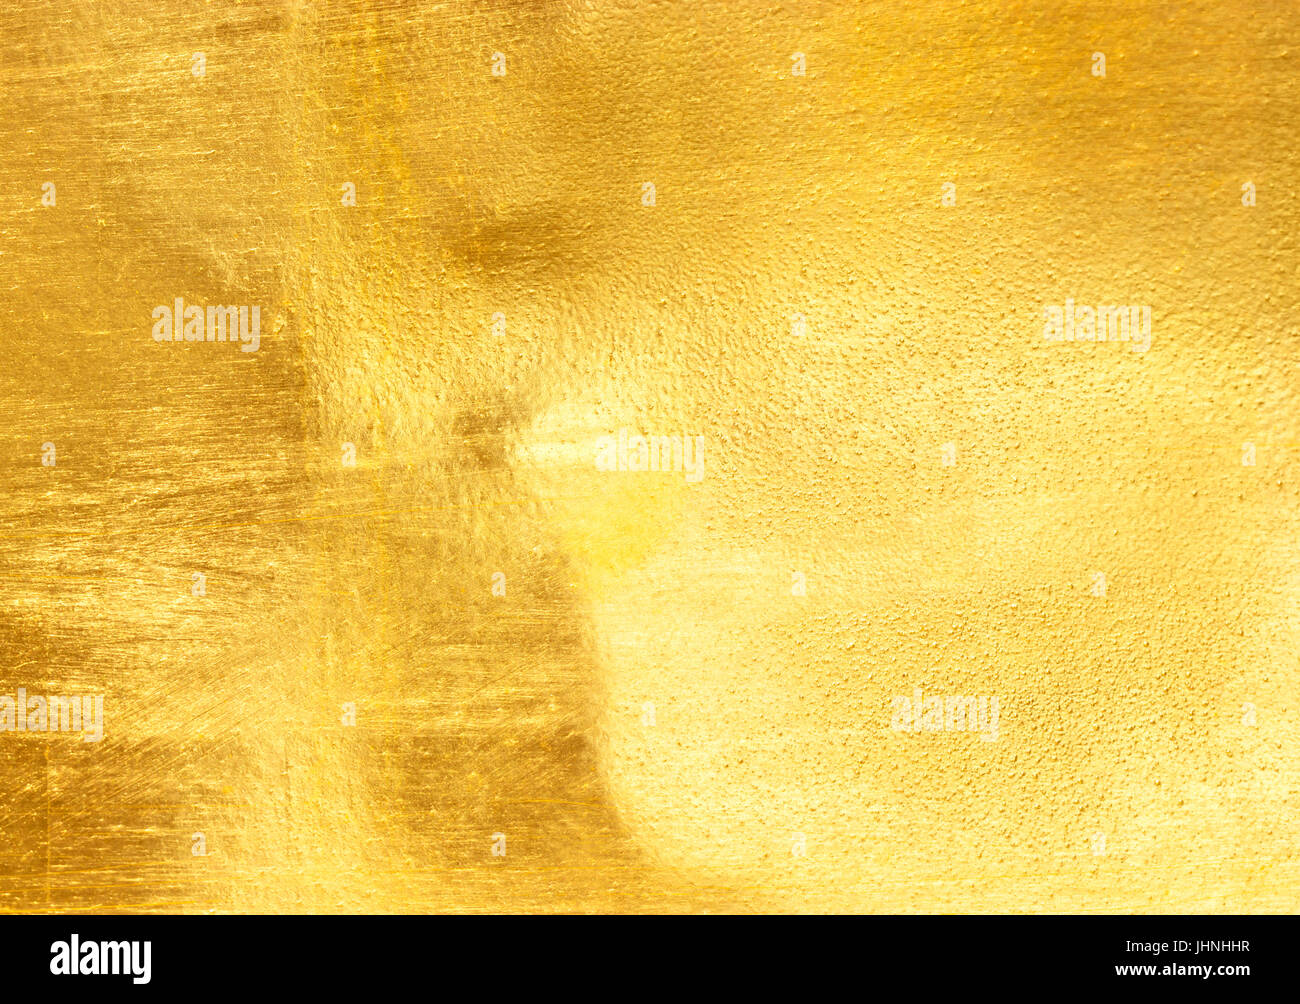 Feuille d'or feuille jaune brillant texture background Banque D'Images